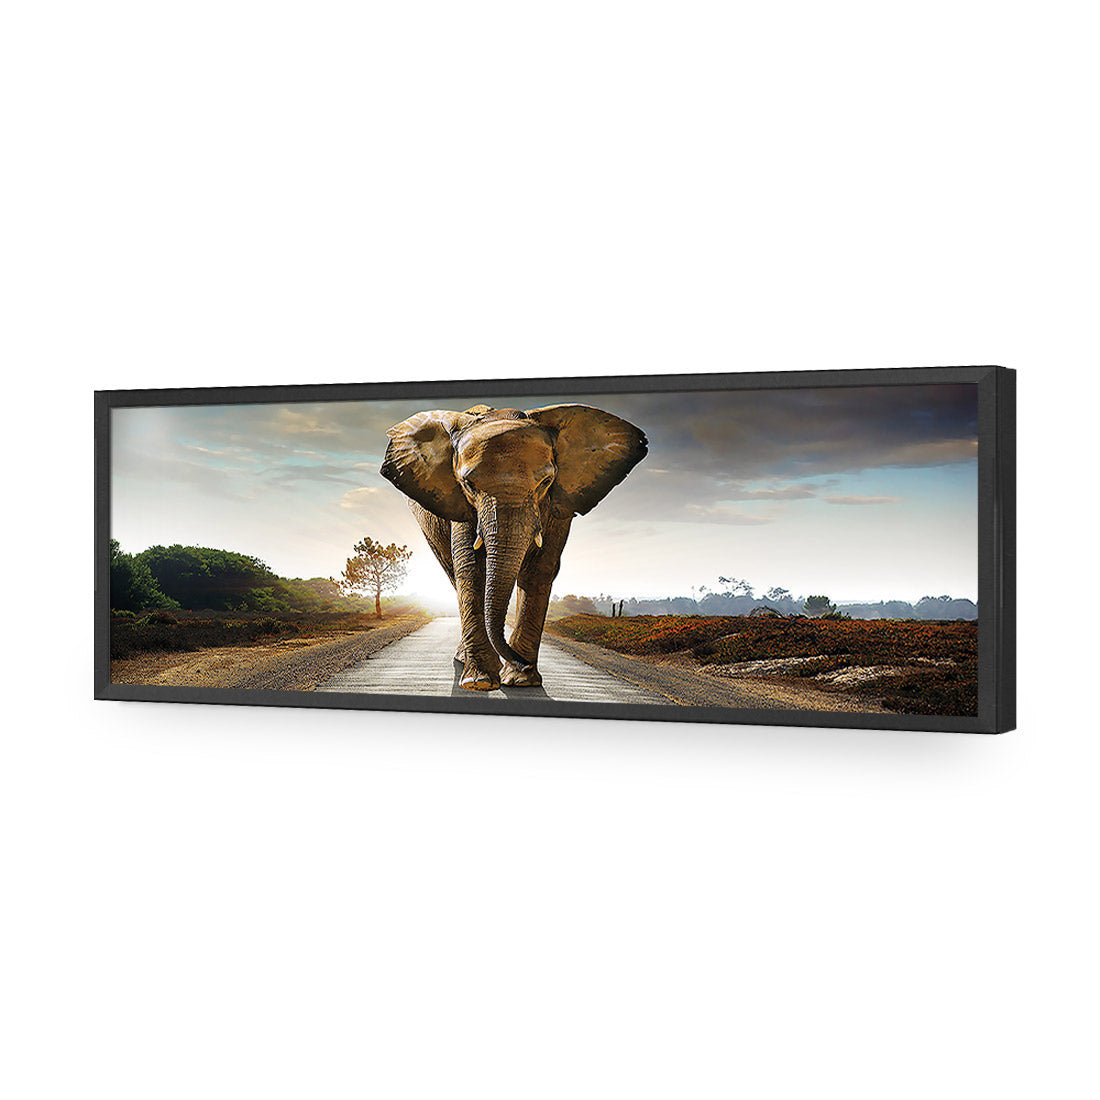 Determined Elephant, Long Acrylic Glass Art-Acrylic-Wall Art Design-Without Border-Acrylic - Black Frame-60x20cm-Wall Art Designs